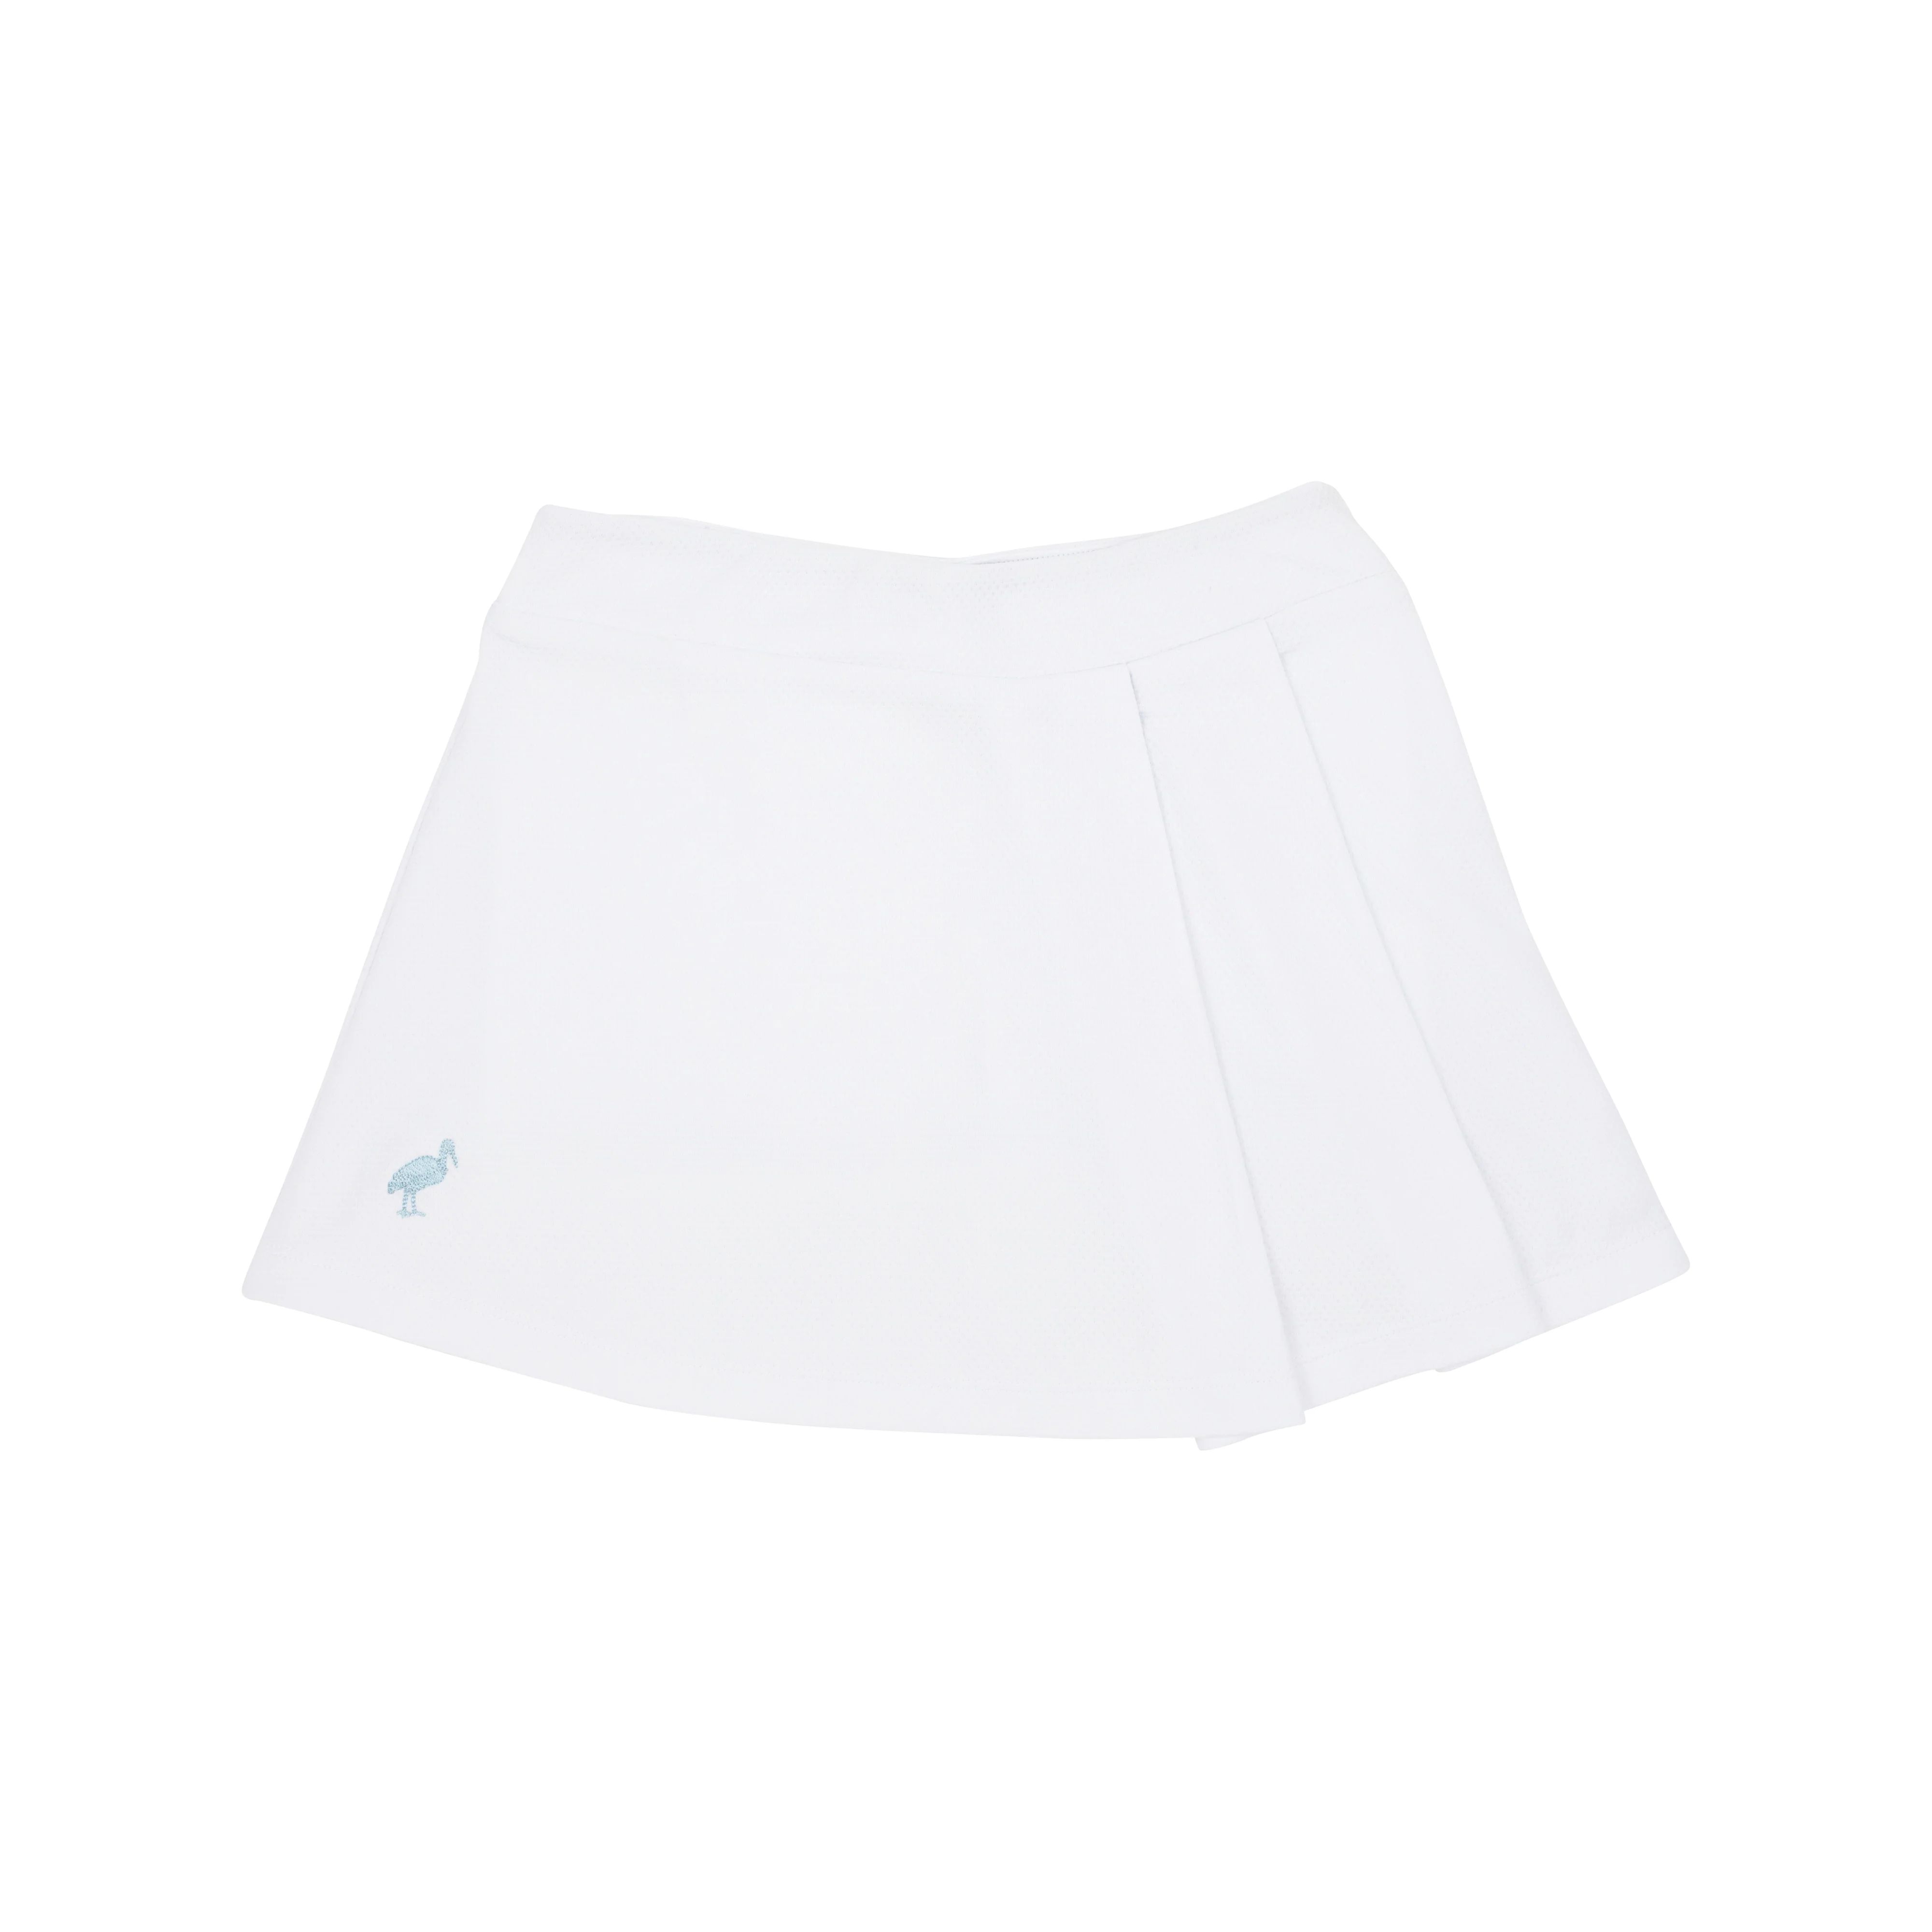 Prepletic ® Sydney Skort (Performance Fabric) - Worth Avenue White | The Beaufort Bonnet Company